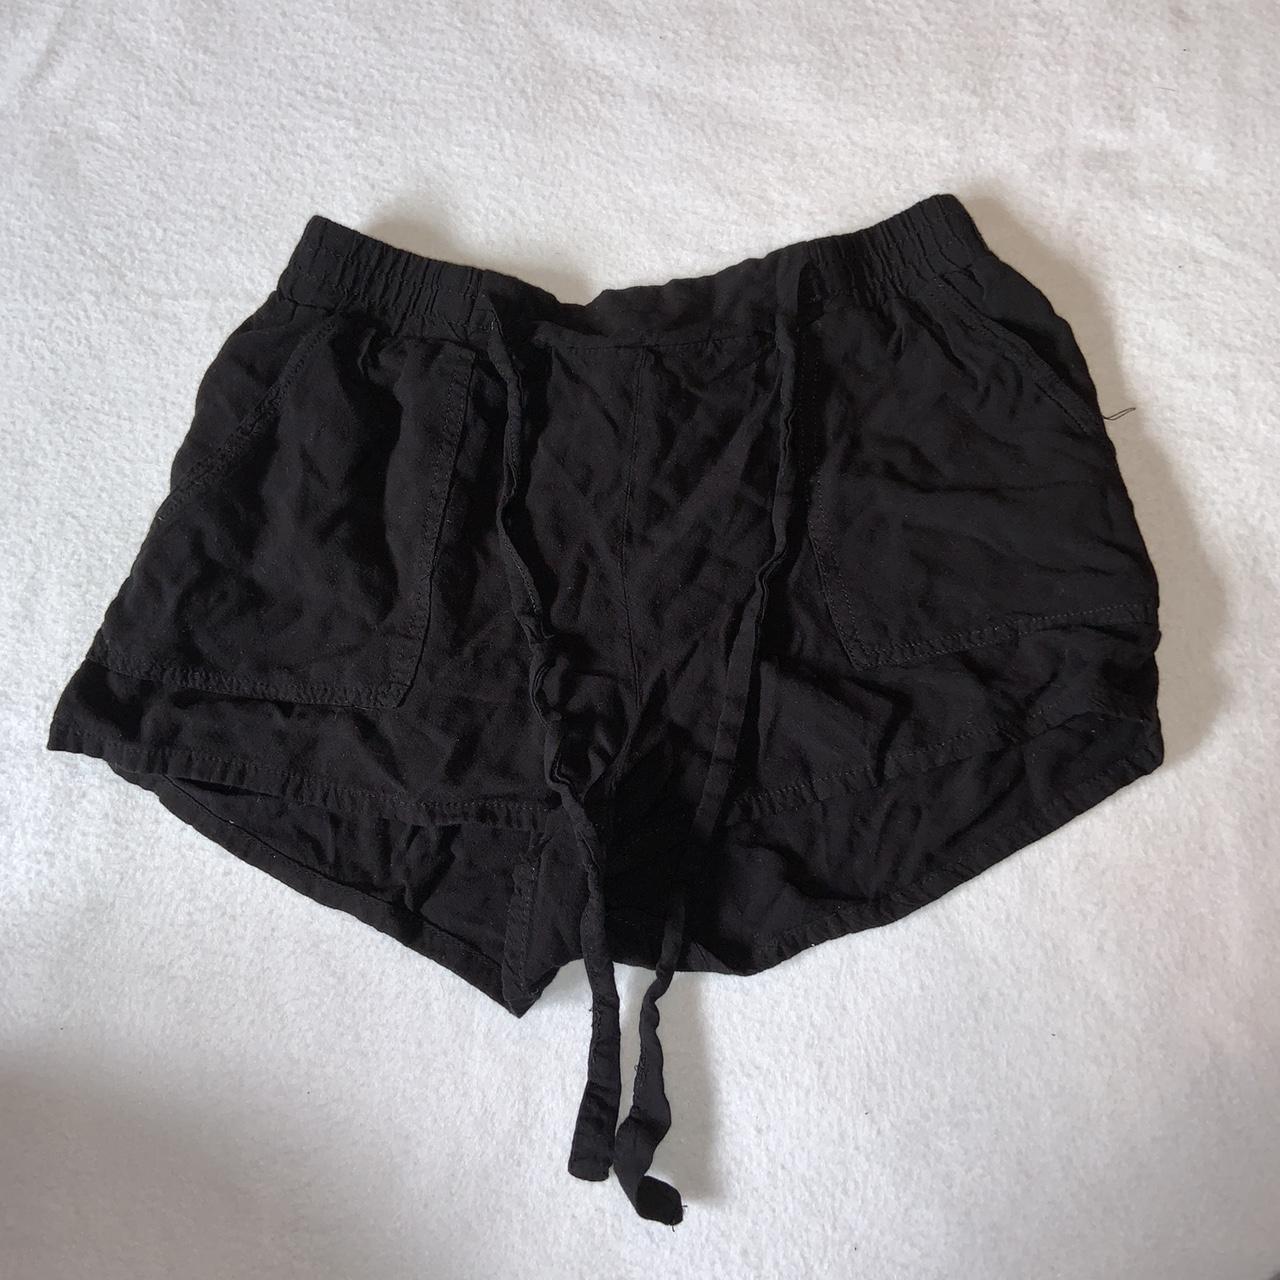 Product Image 1 - black thin shorts
size: small 
brand: